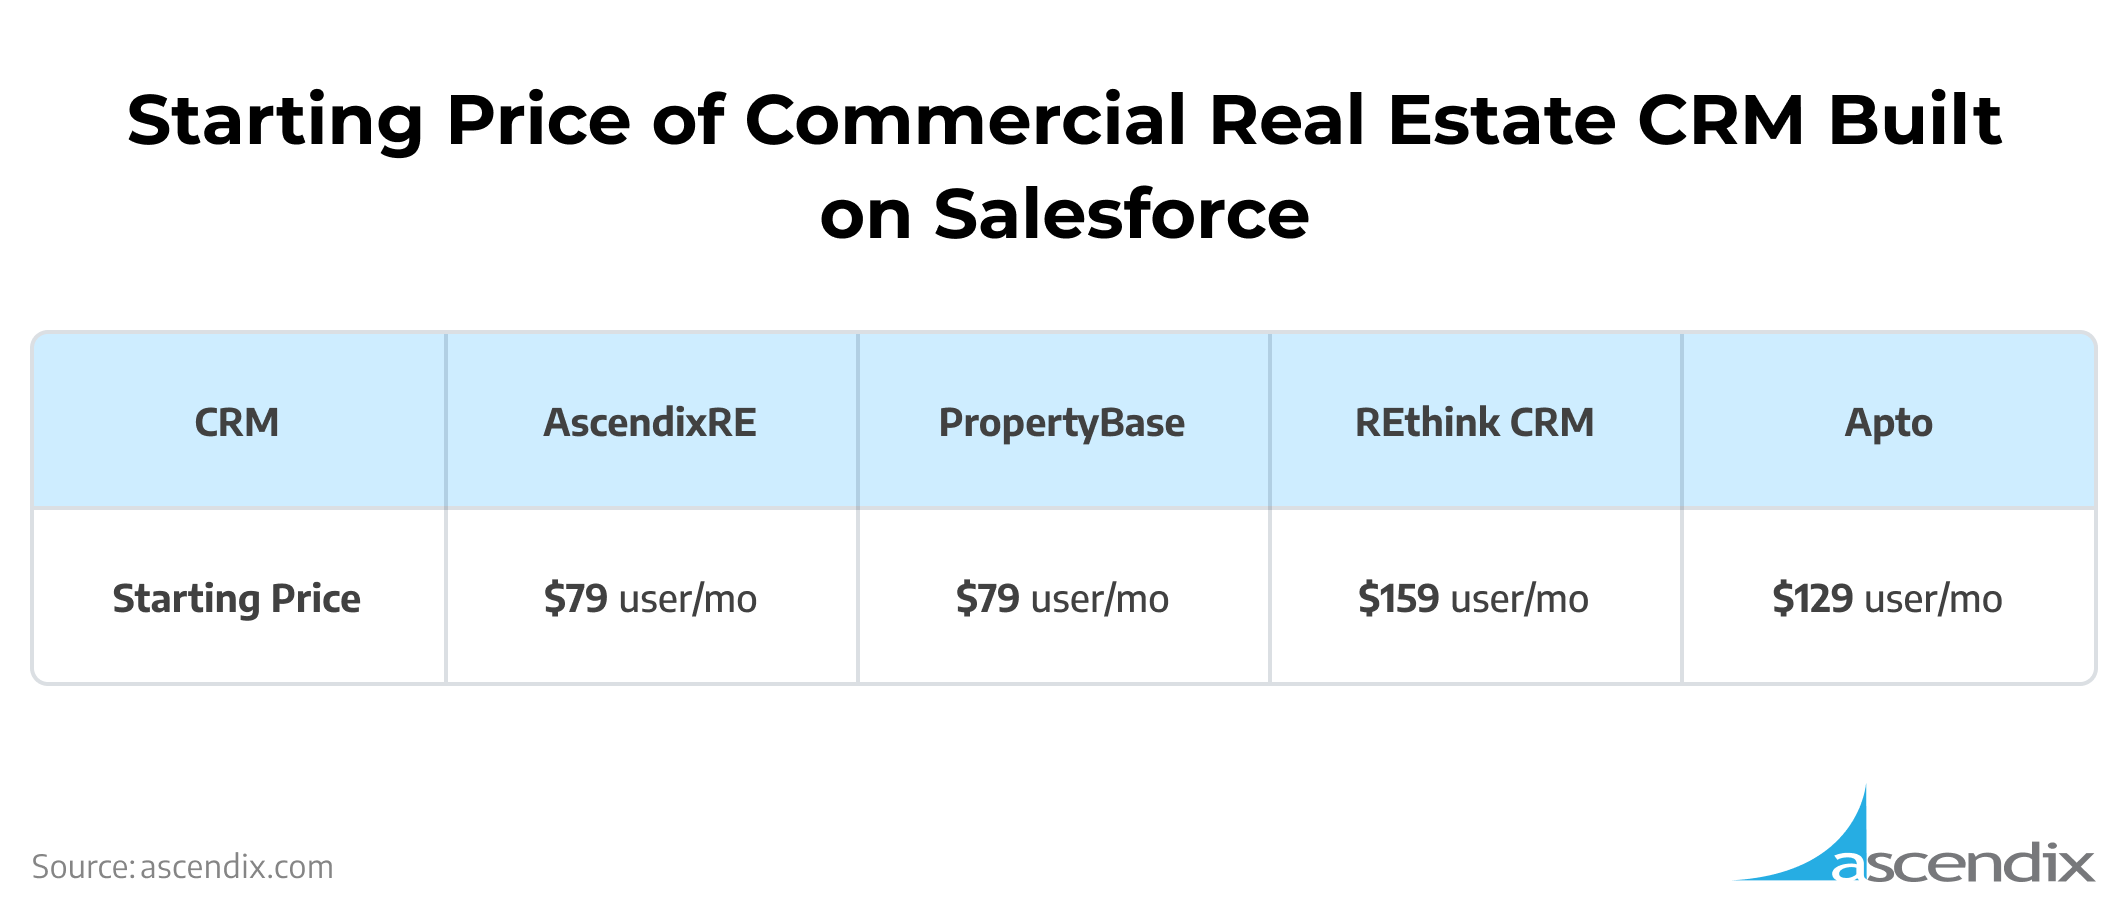 Pricing of Commercial Real Estate CRM Built on Salesforce | Ascendix